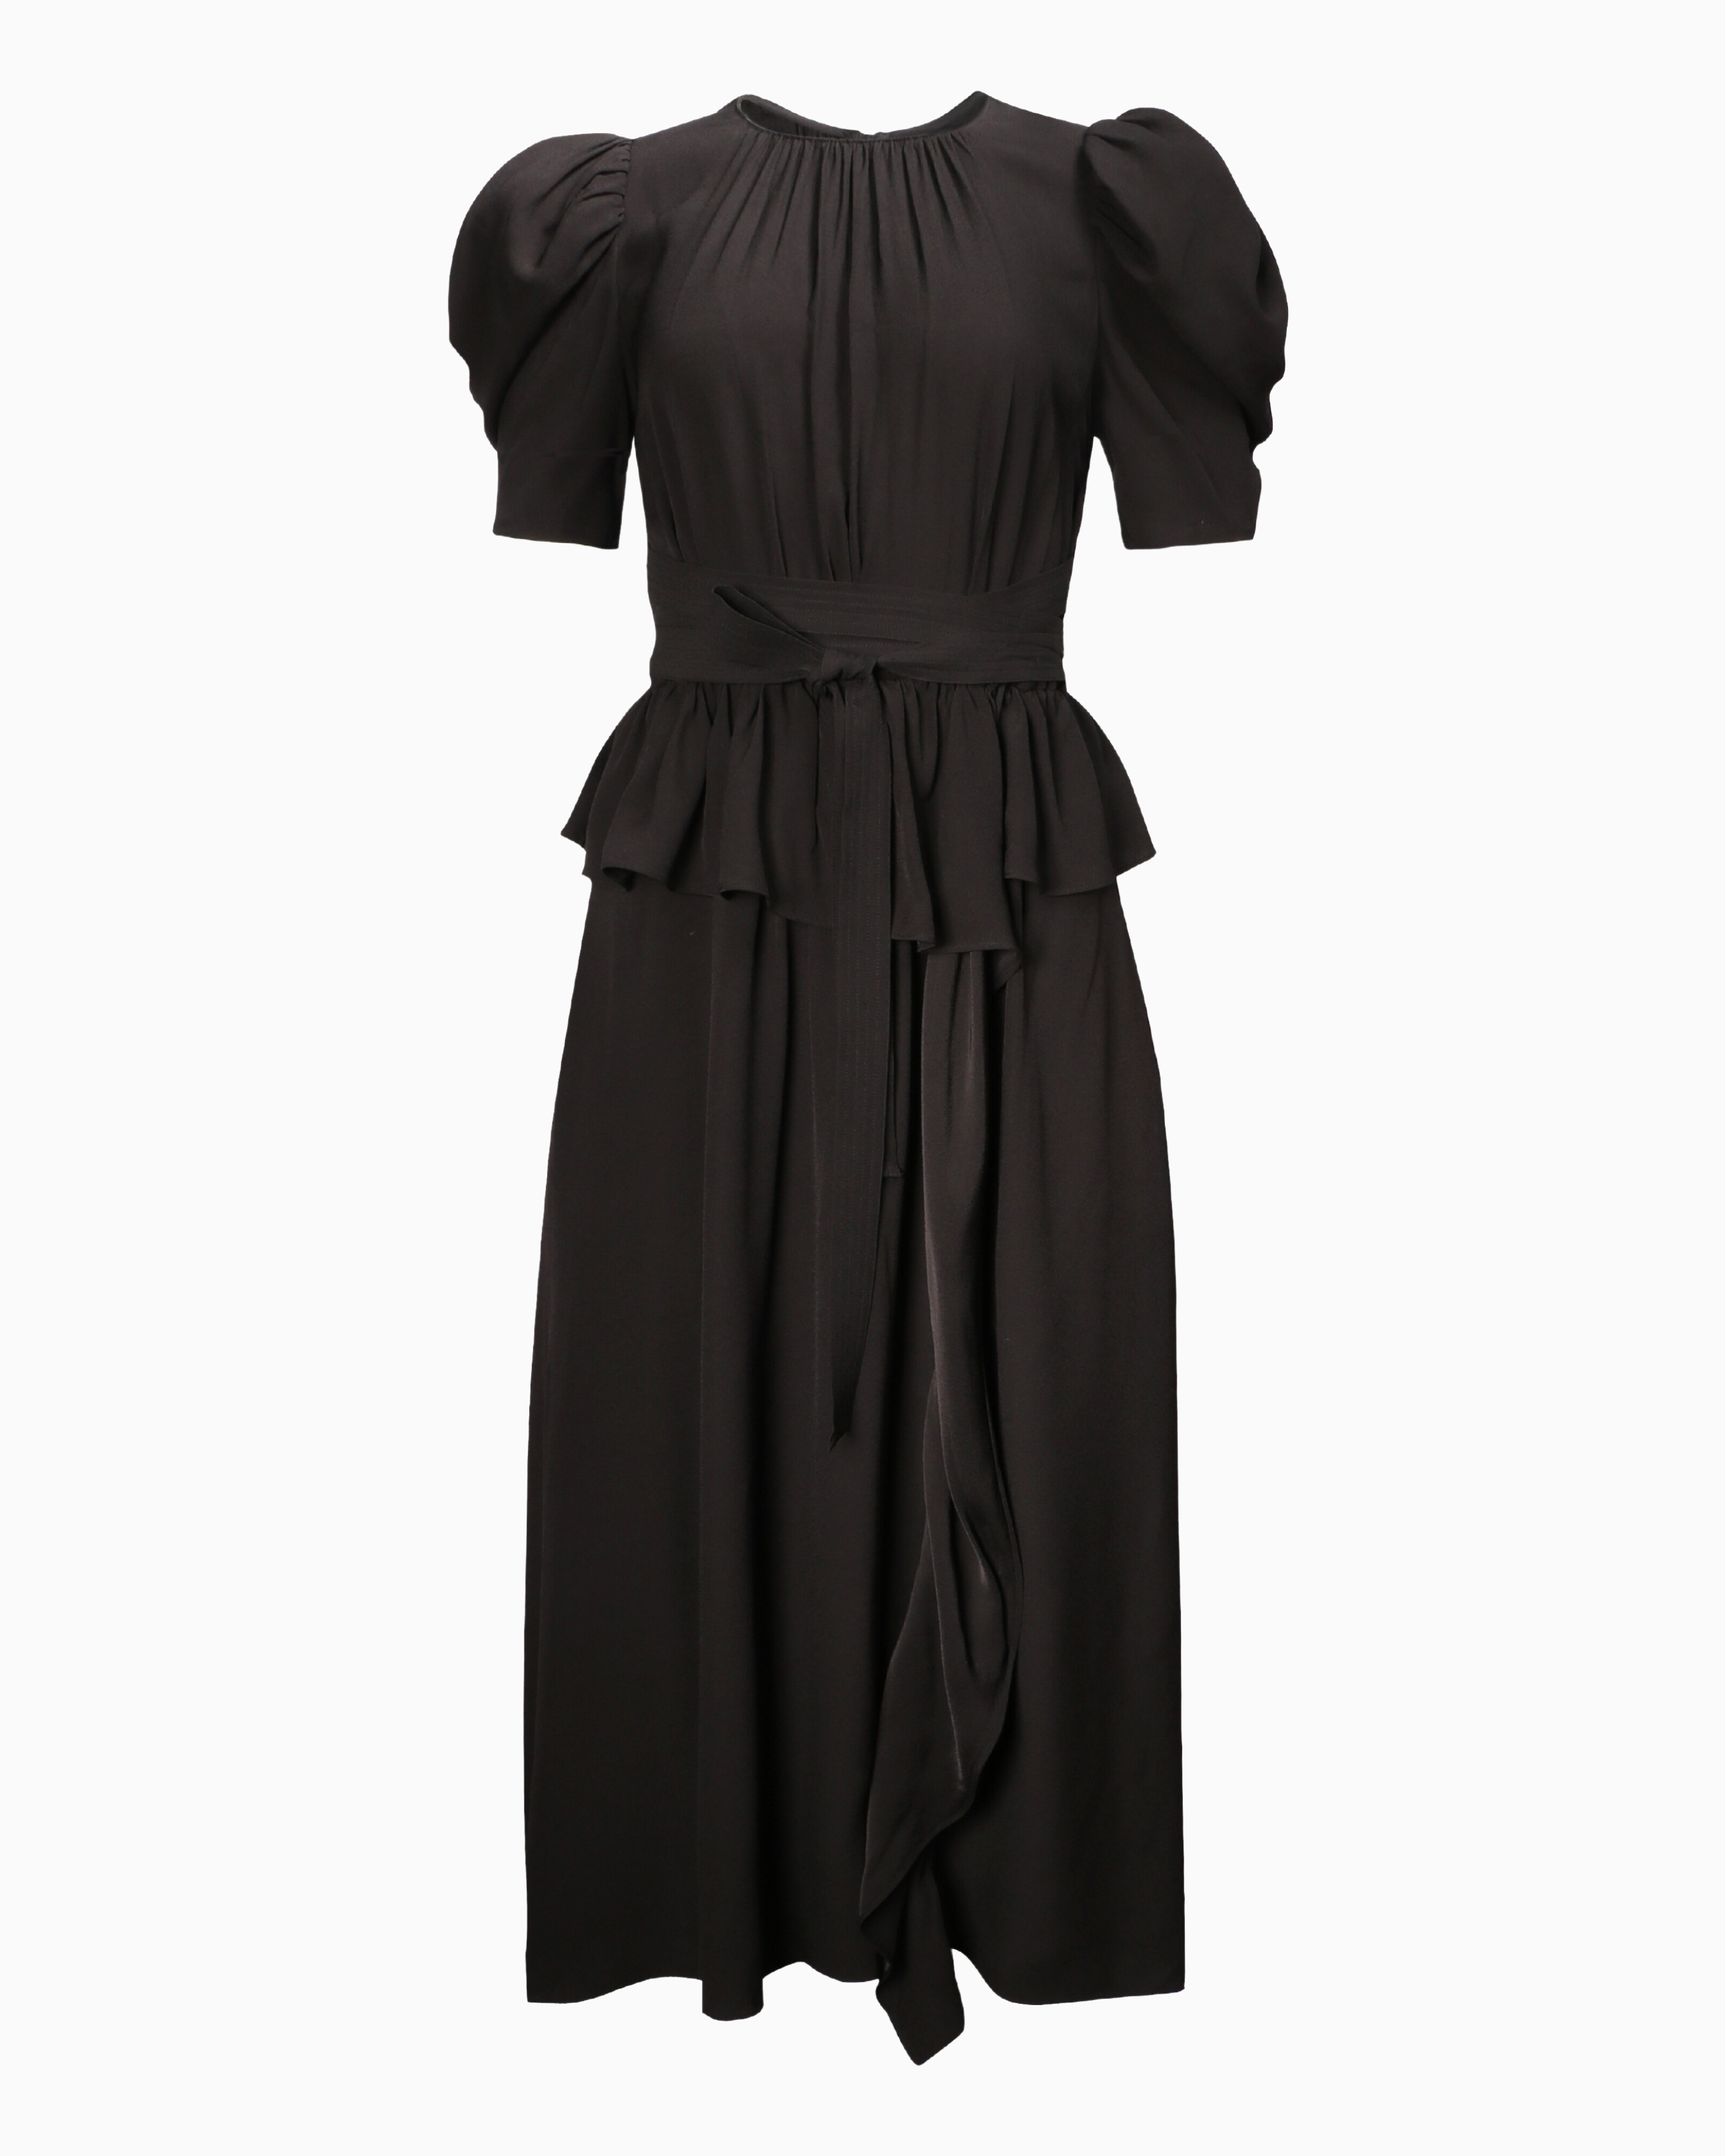 Ulla Johnson Marion Dress in Noir